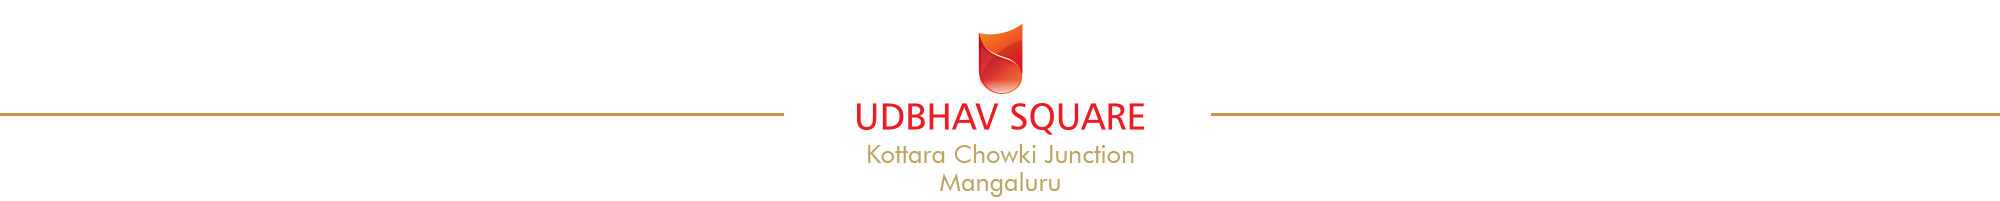 udbhav-square-logo-w-line